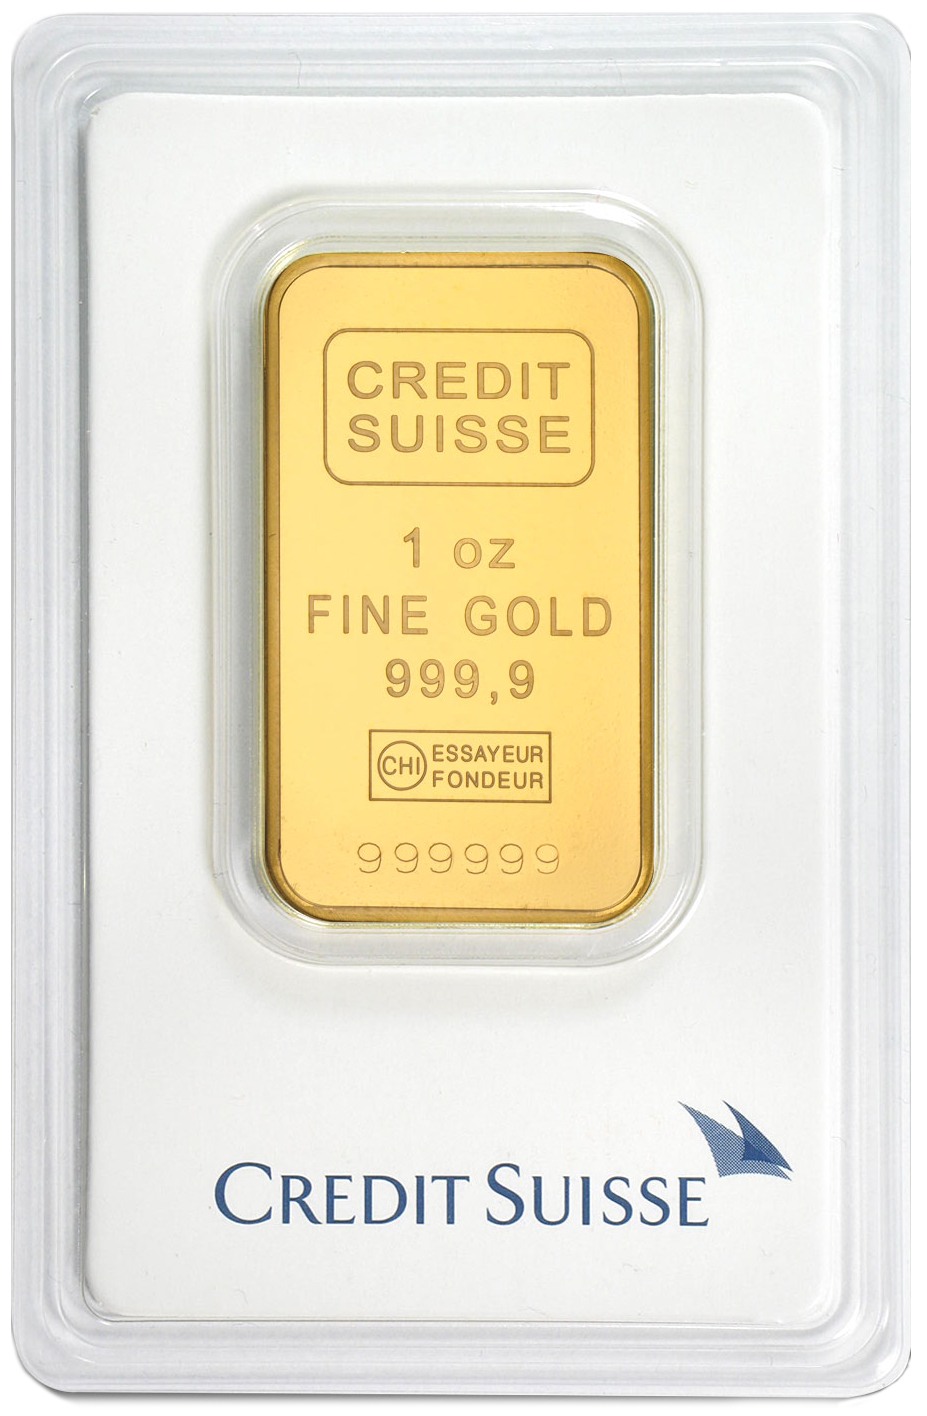 1oz Credit Suisse